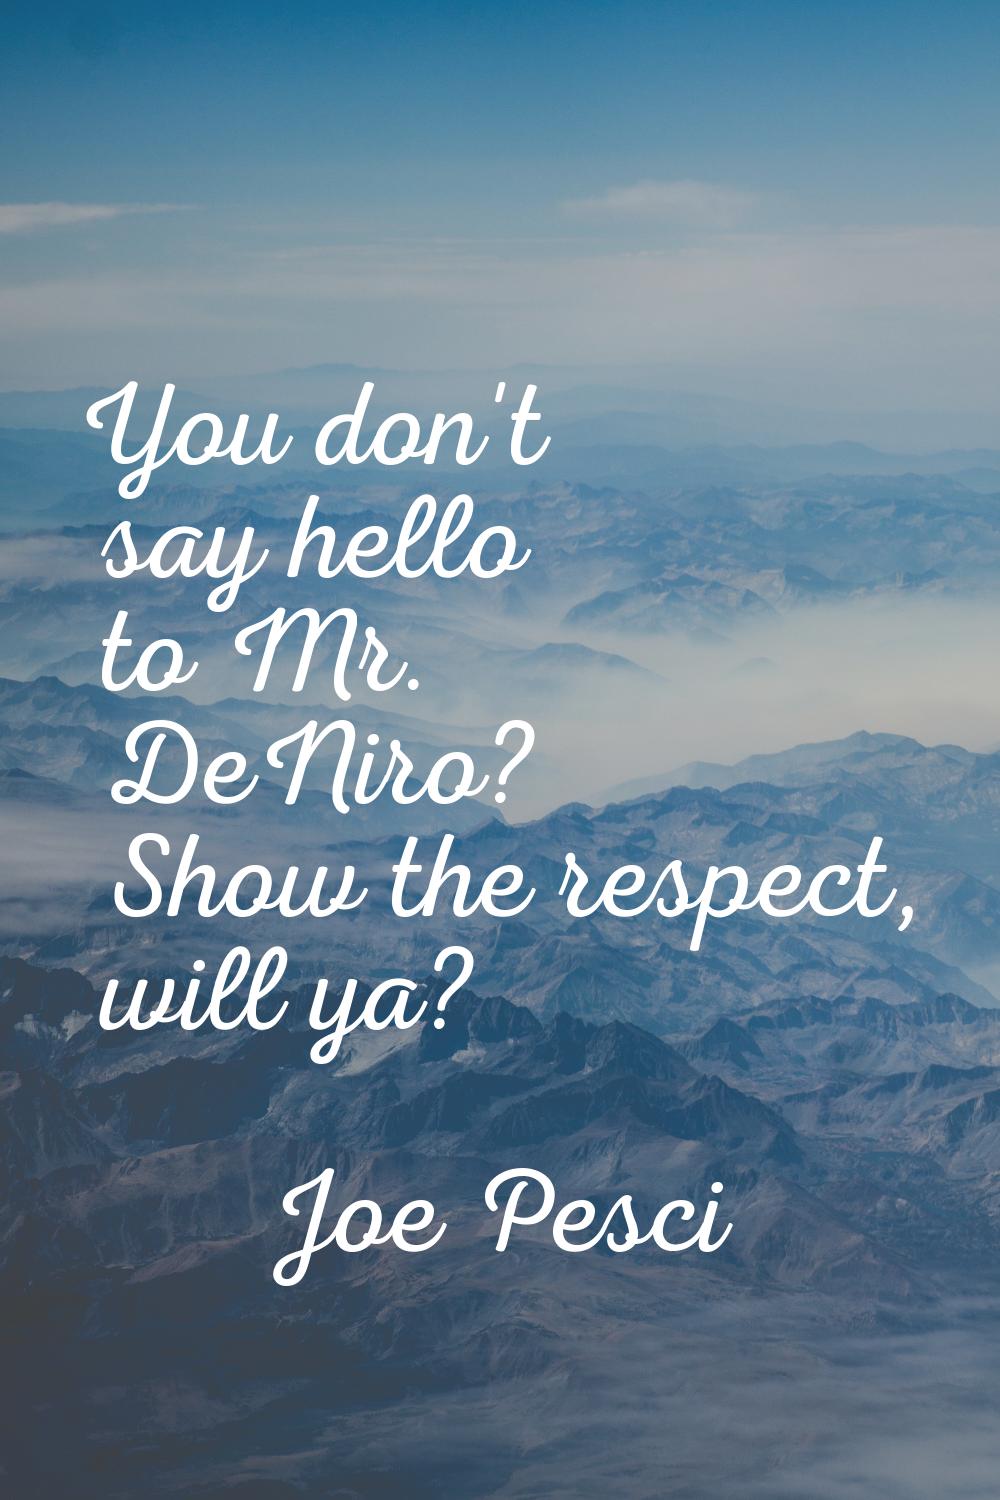 You don't say hello to Mr. DeNiro? Show the respect, will ya?